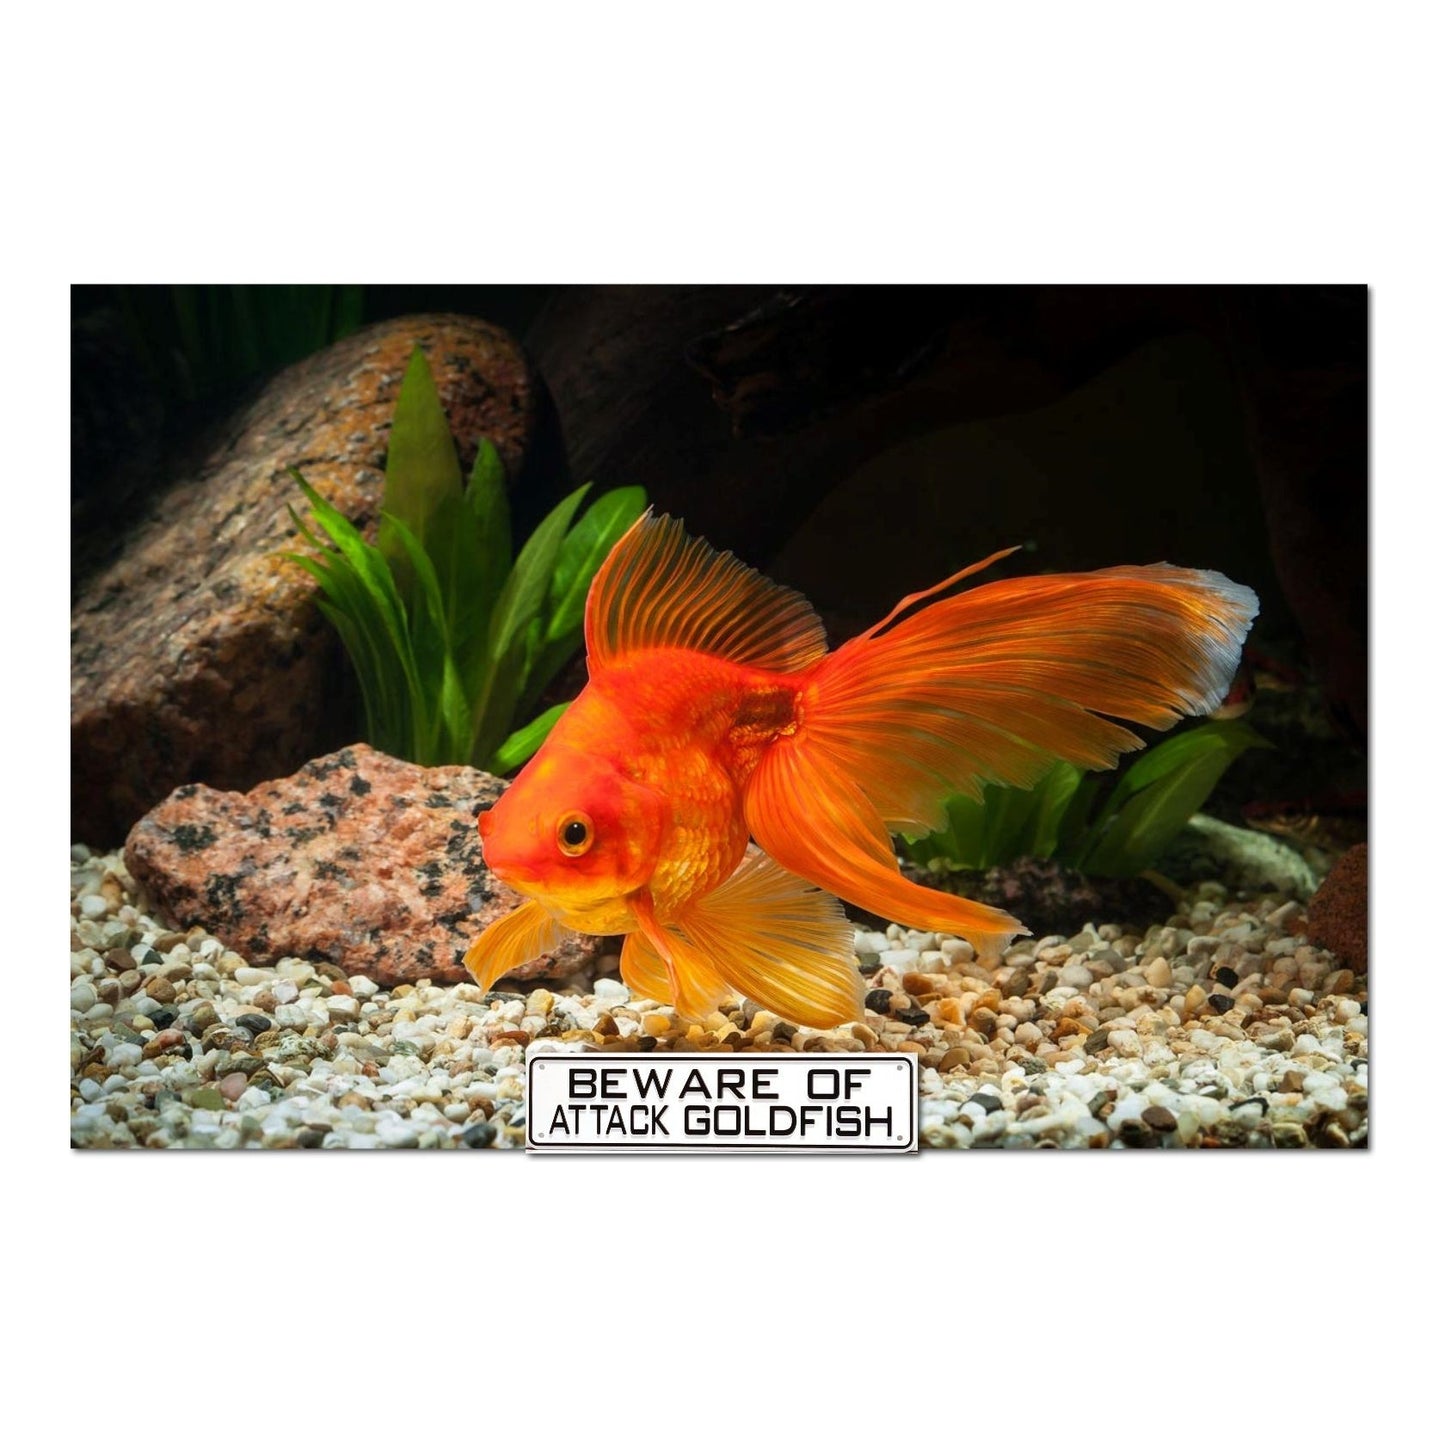 Beware Of Attack Goldfish Sign Solid Plastic 12 X 3